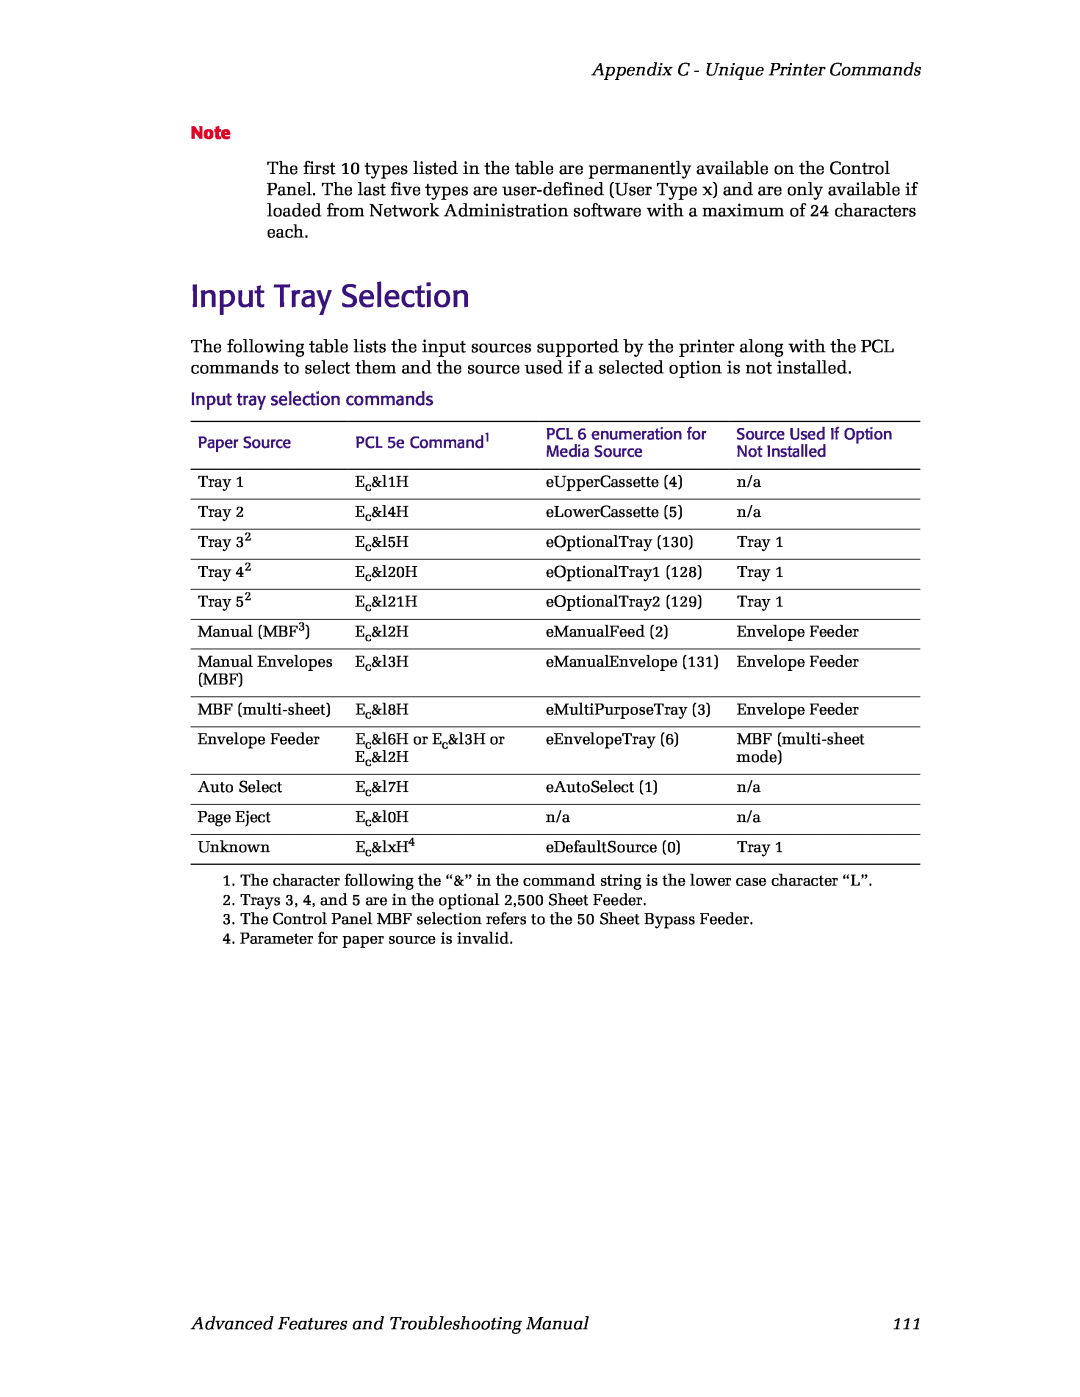 Xerox N4525 manual Input Tray Selection, Appendix C - Unique Printer Commands, Input tray selection commands 